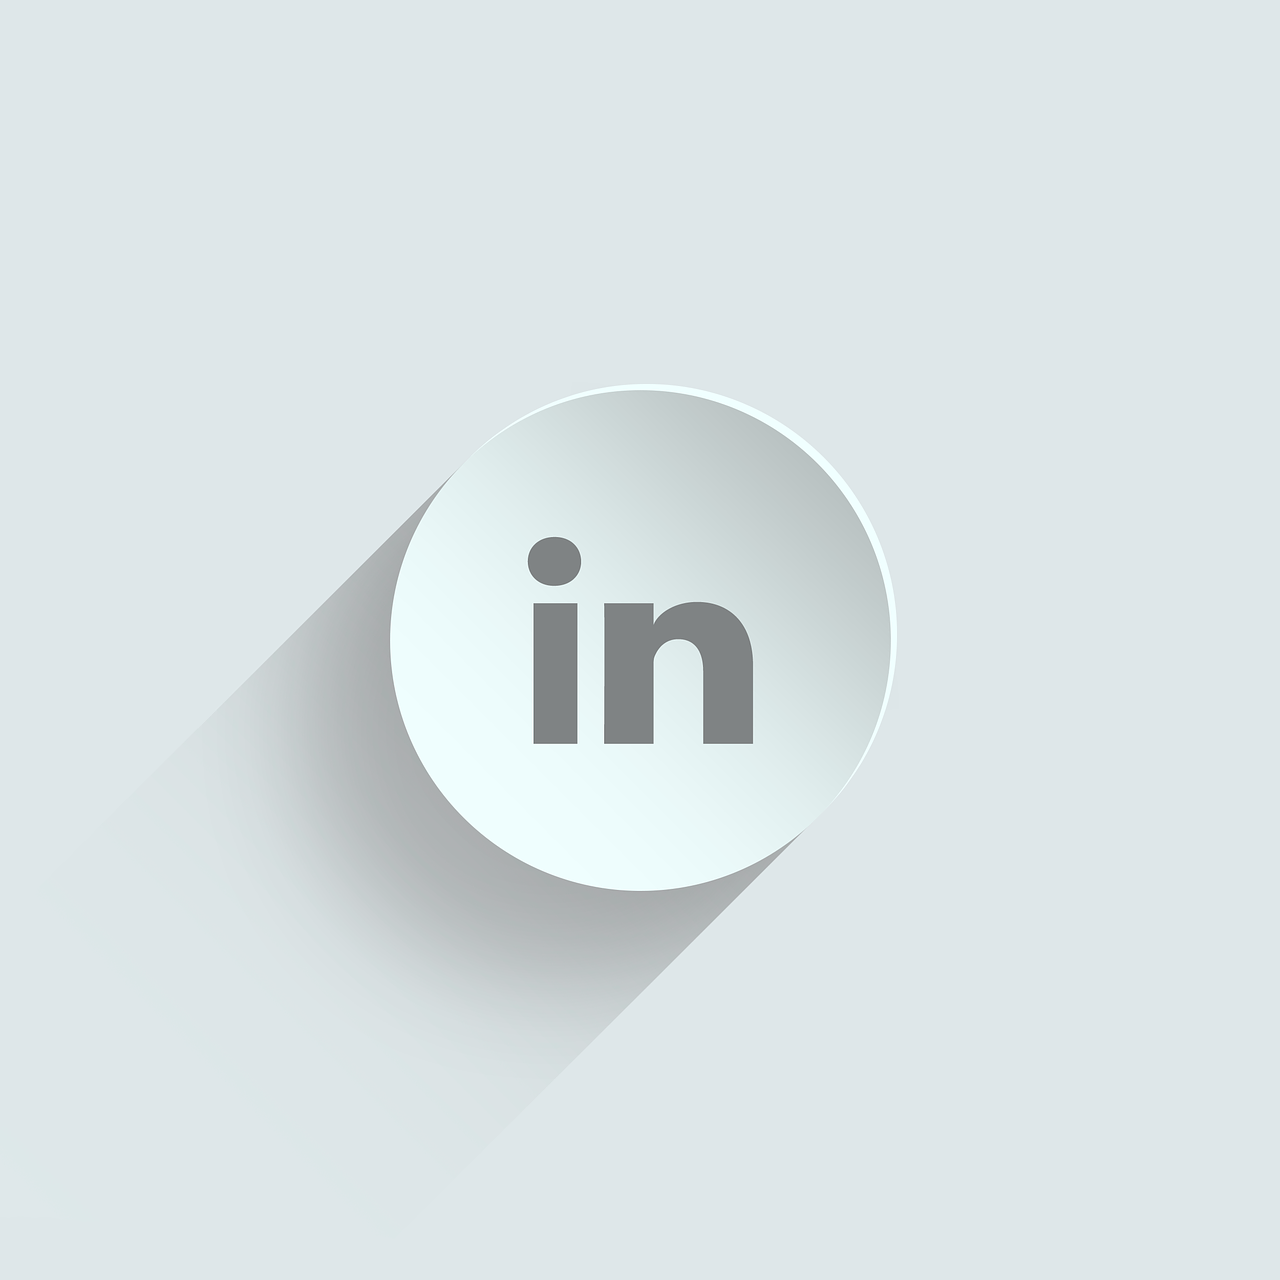 linkedin, linkedin icon, linkedin logo-2095609.jpg